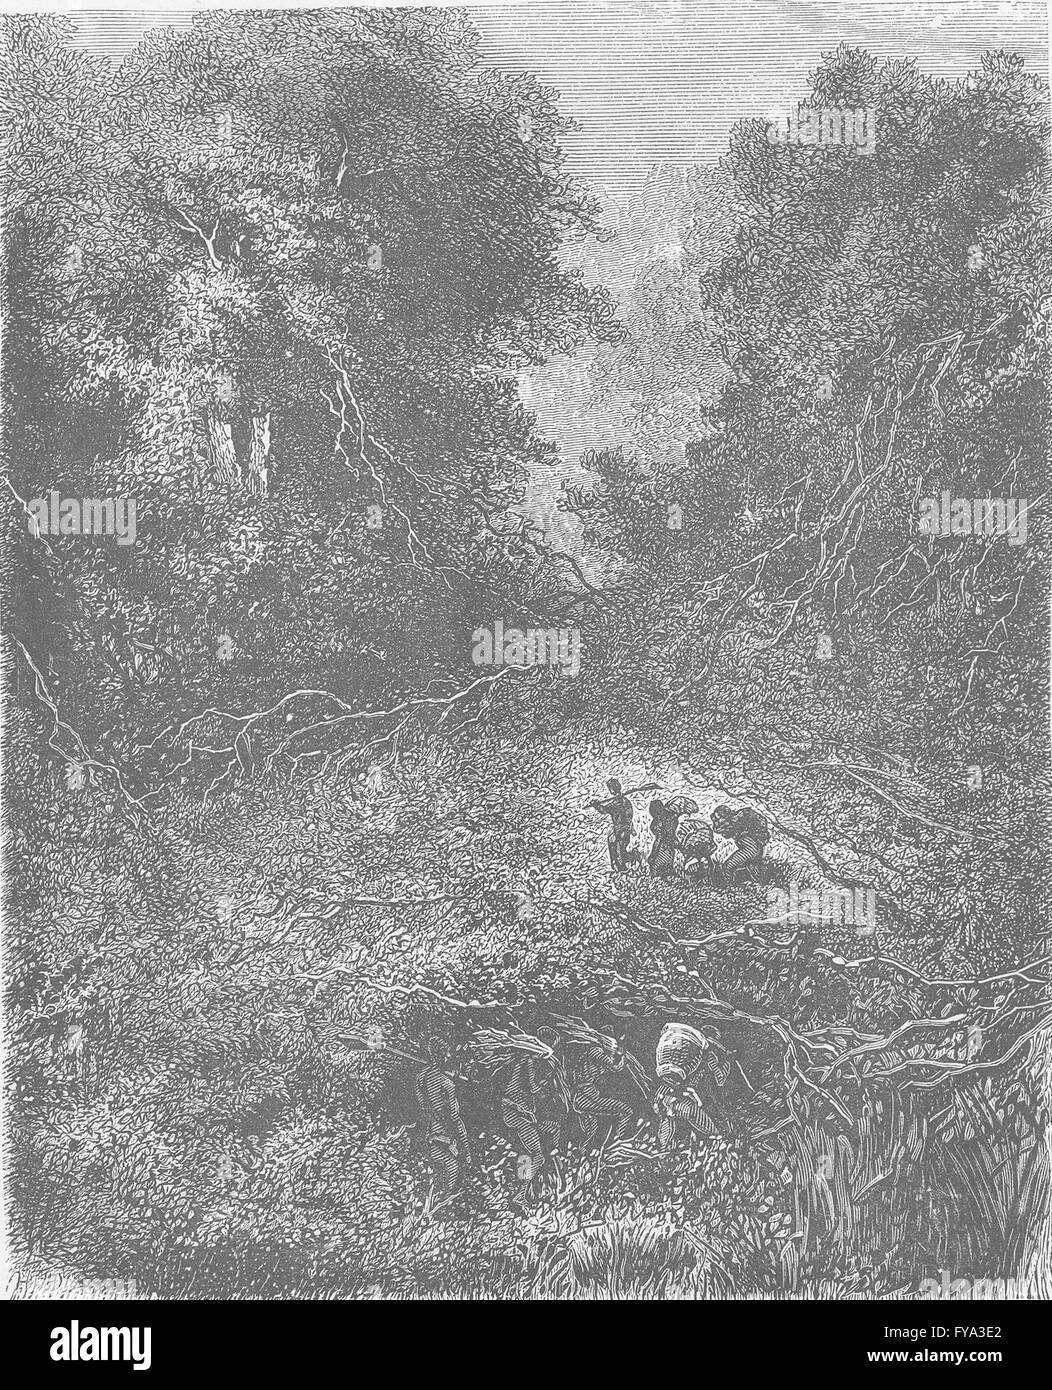 GABON: Bush at Ovamba, on the River Ogooue, antique print 1891 Stock Photo